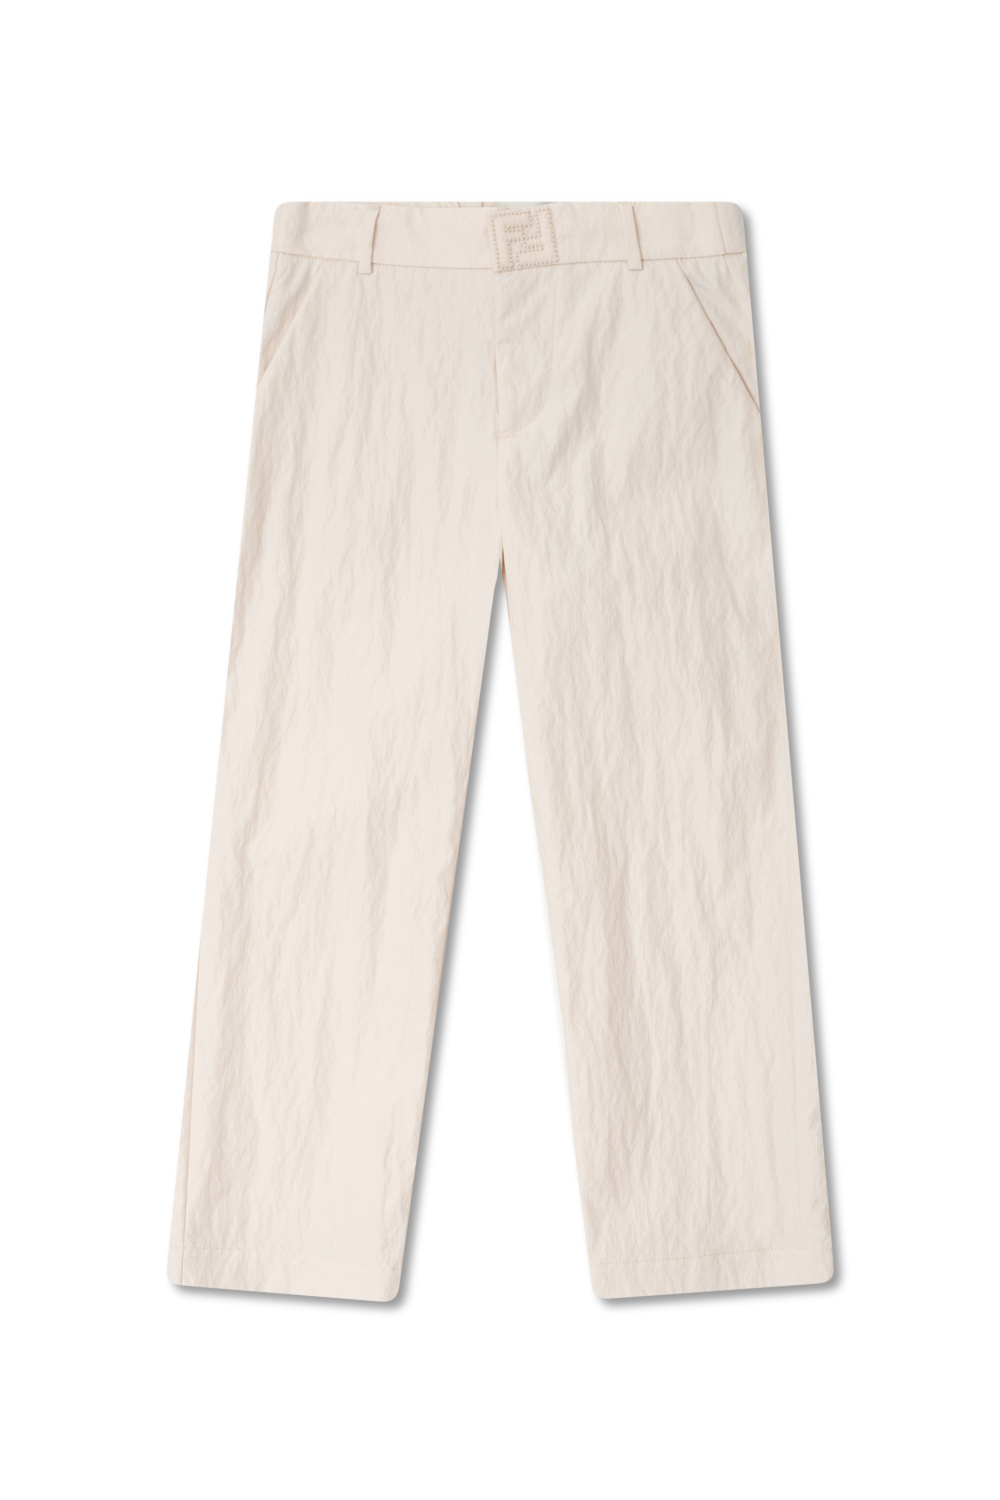 Fendi Kids Cotton Alaska trousers